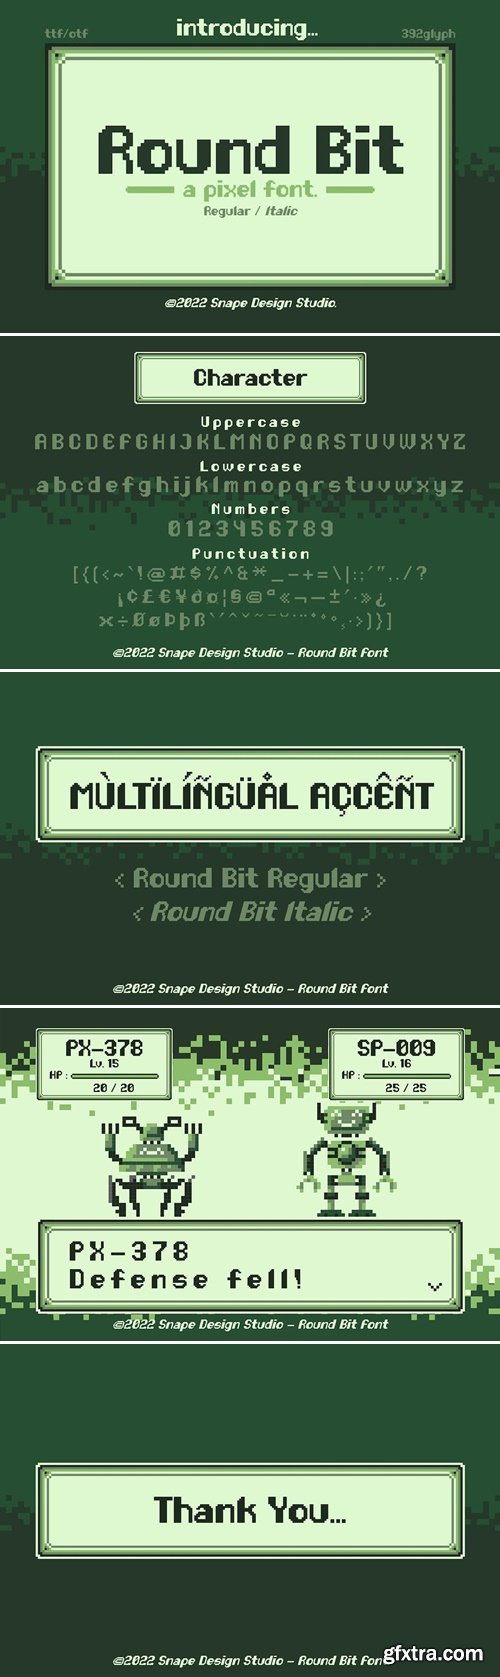 Round Bit - Pixel Font